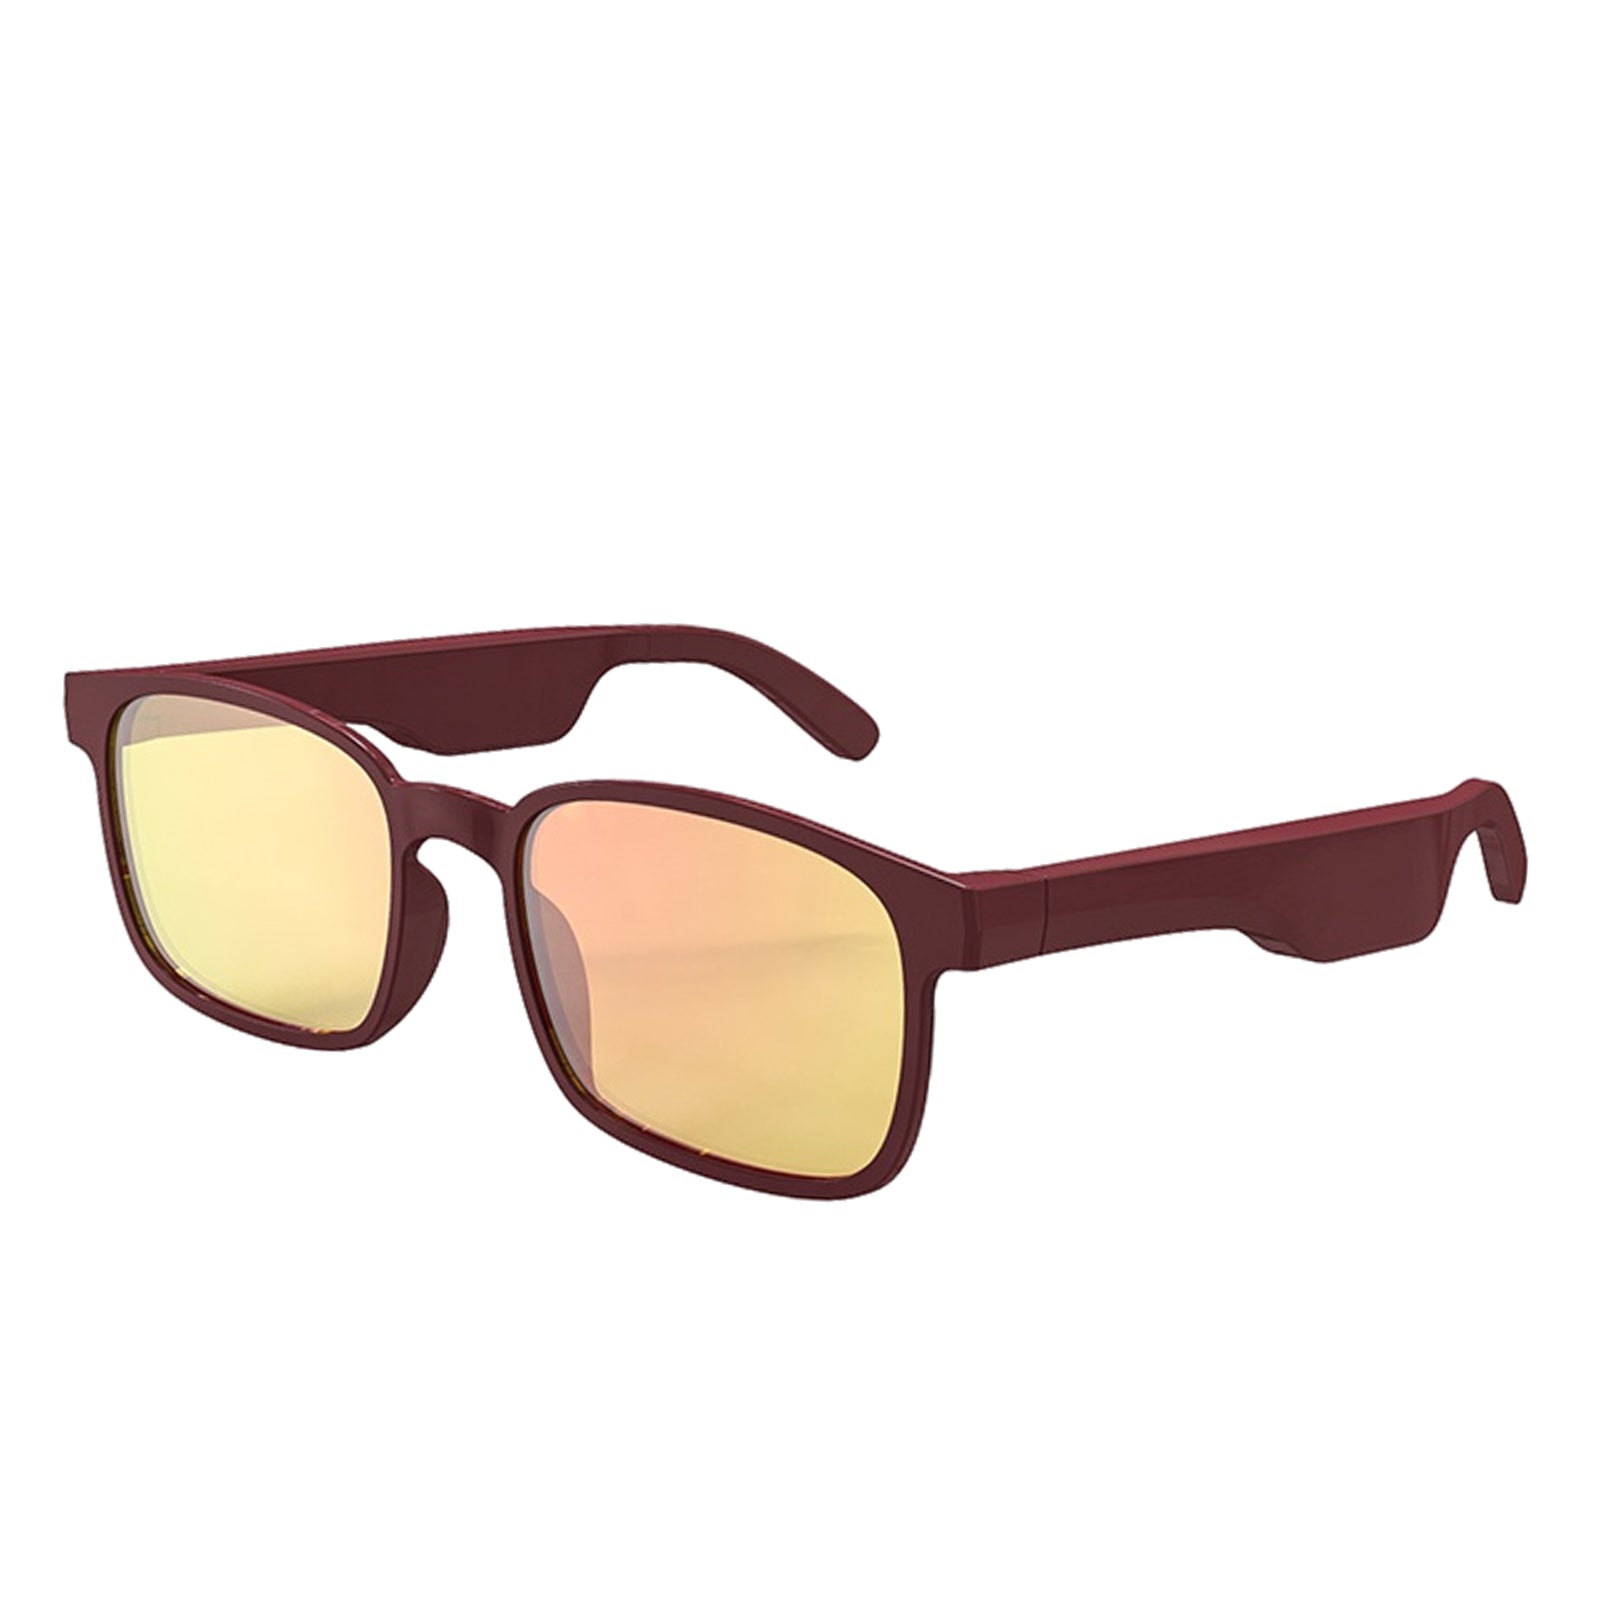 Bluetooth Sunglasses Stereo Headphones Smart Glasses Brown Round